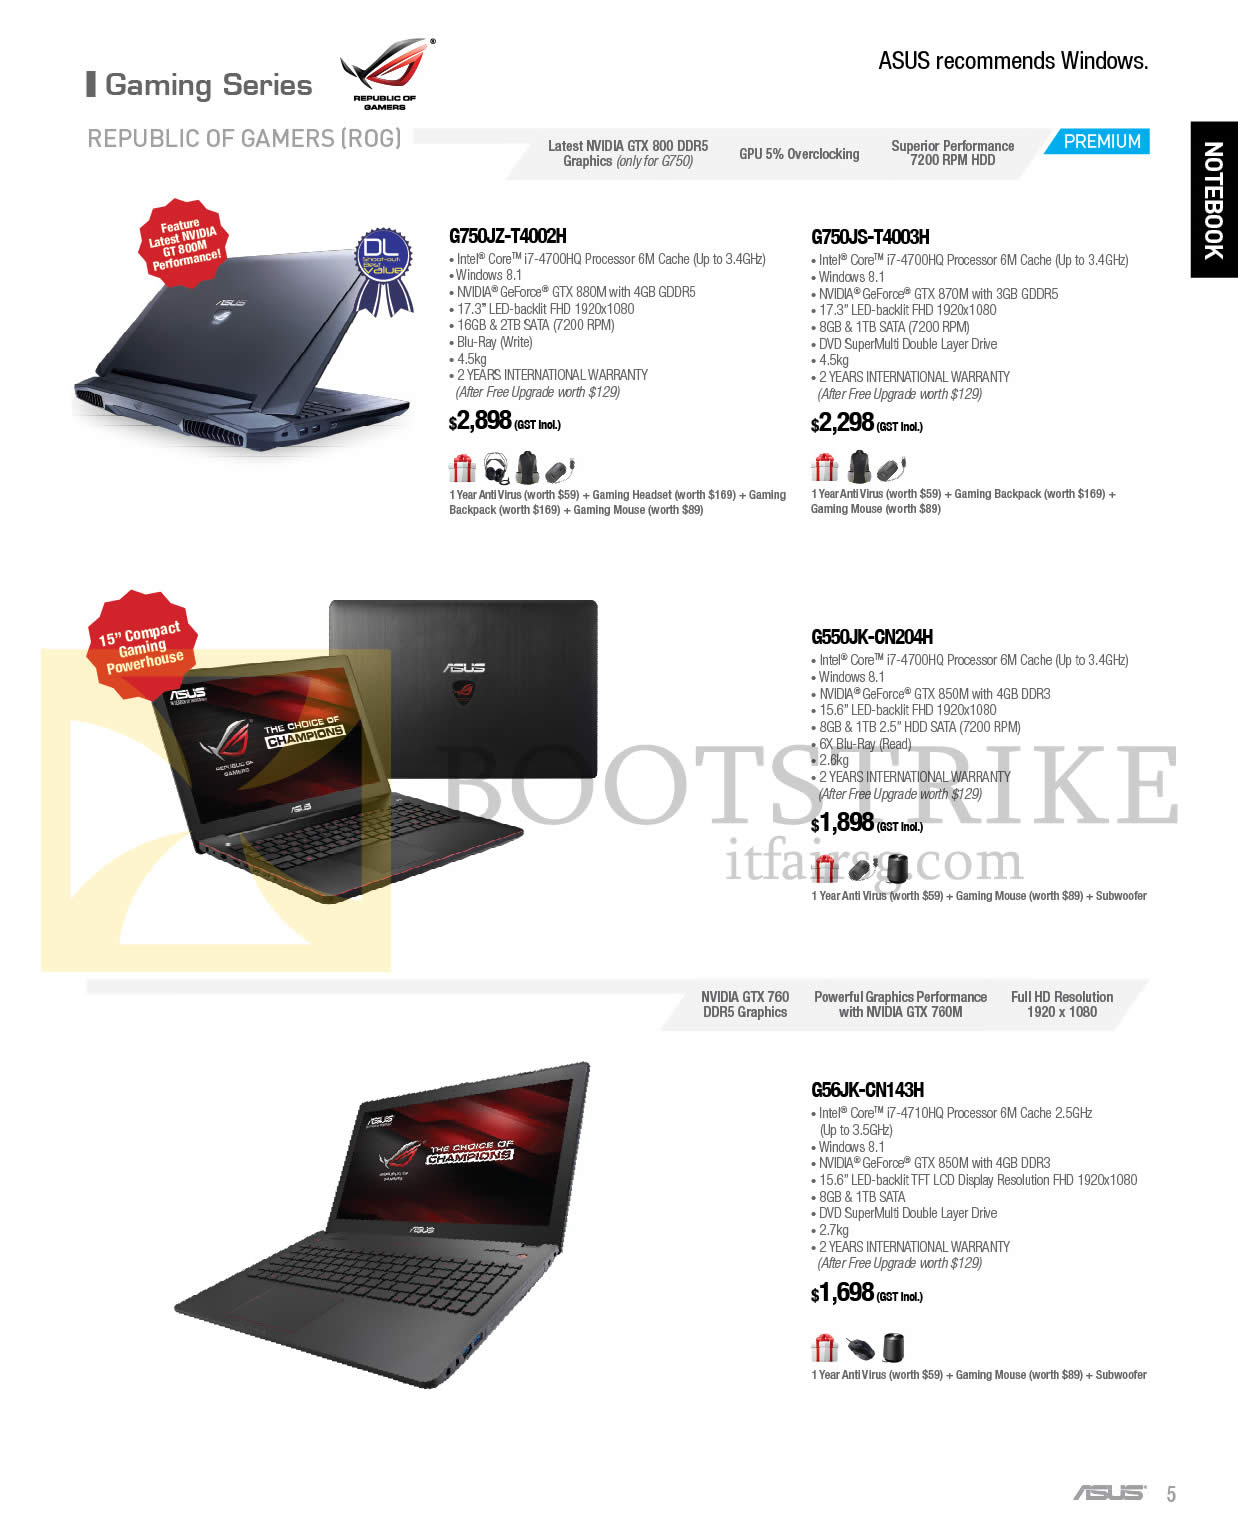 COMEX 2014 price list image brochure of ASUS Notebooks Gaming Series G750JZ-T4002H, G750JS-T4003H, G550JK-CN204H, G56JK-CN143H